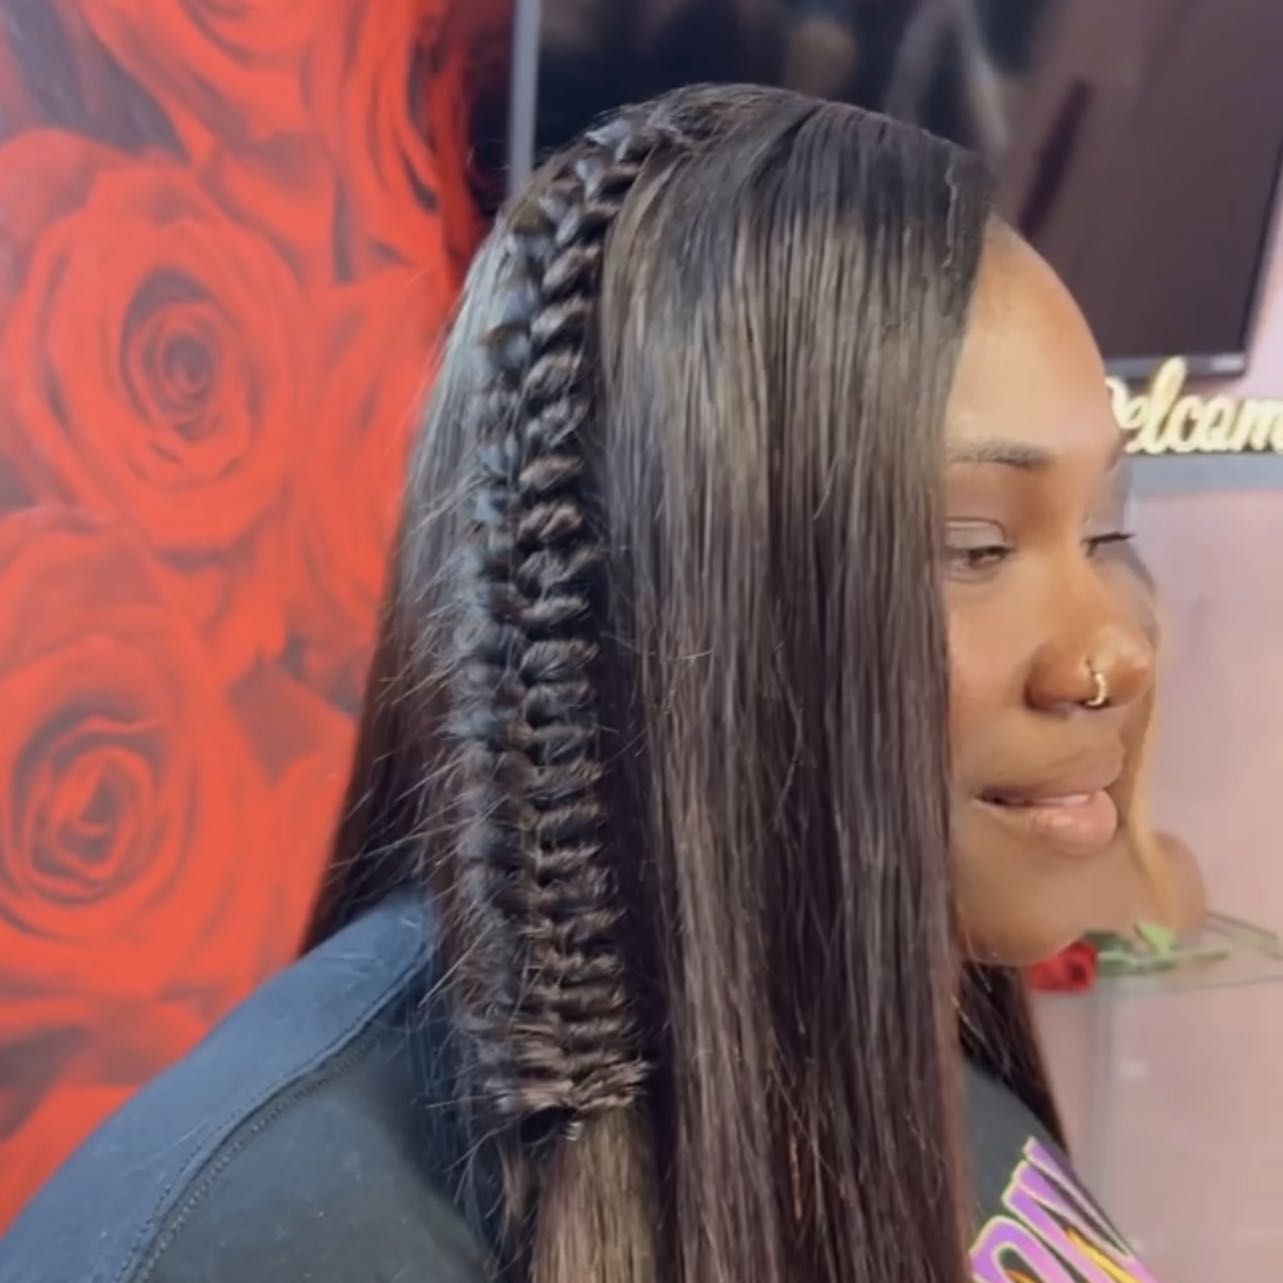 Lace wig Two braids/ 1 fishtail braid portfolio